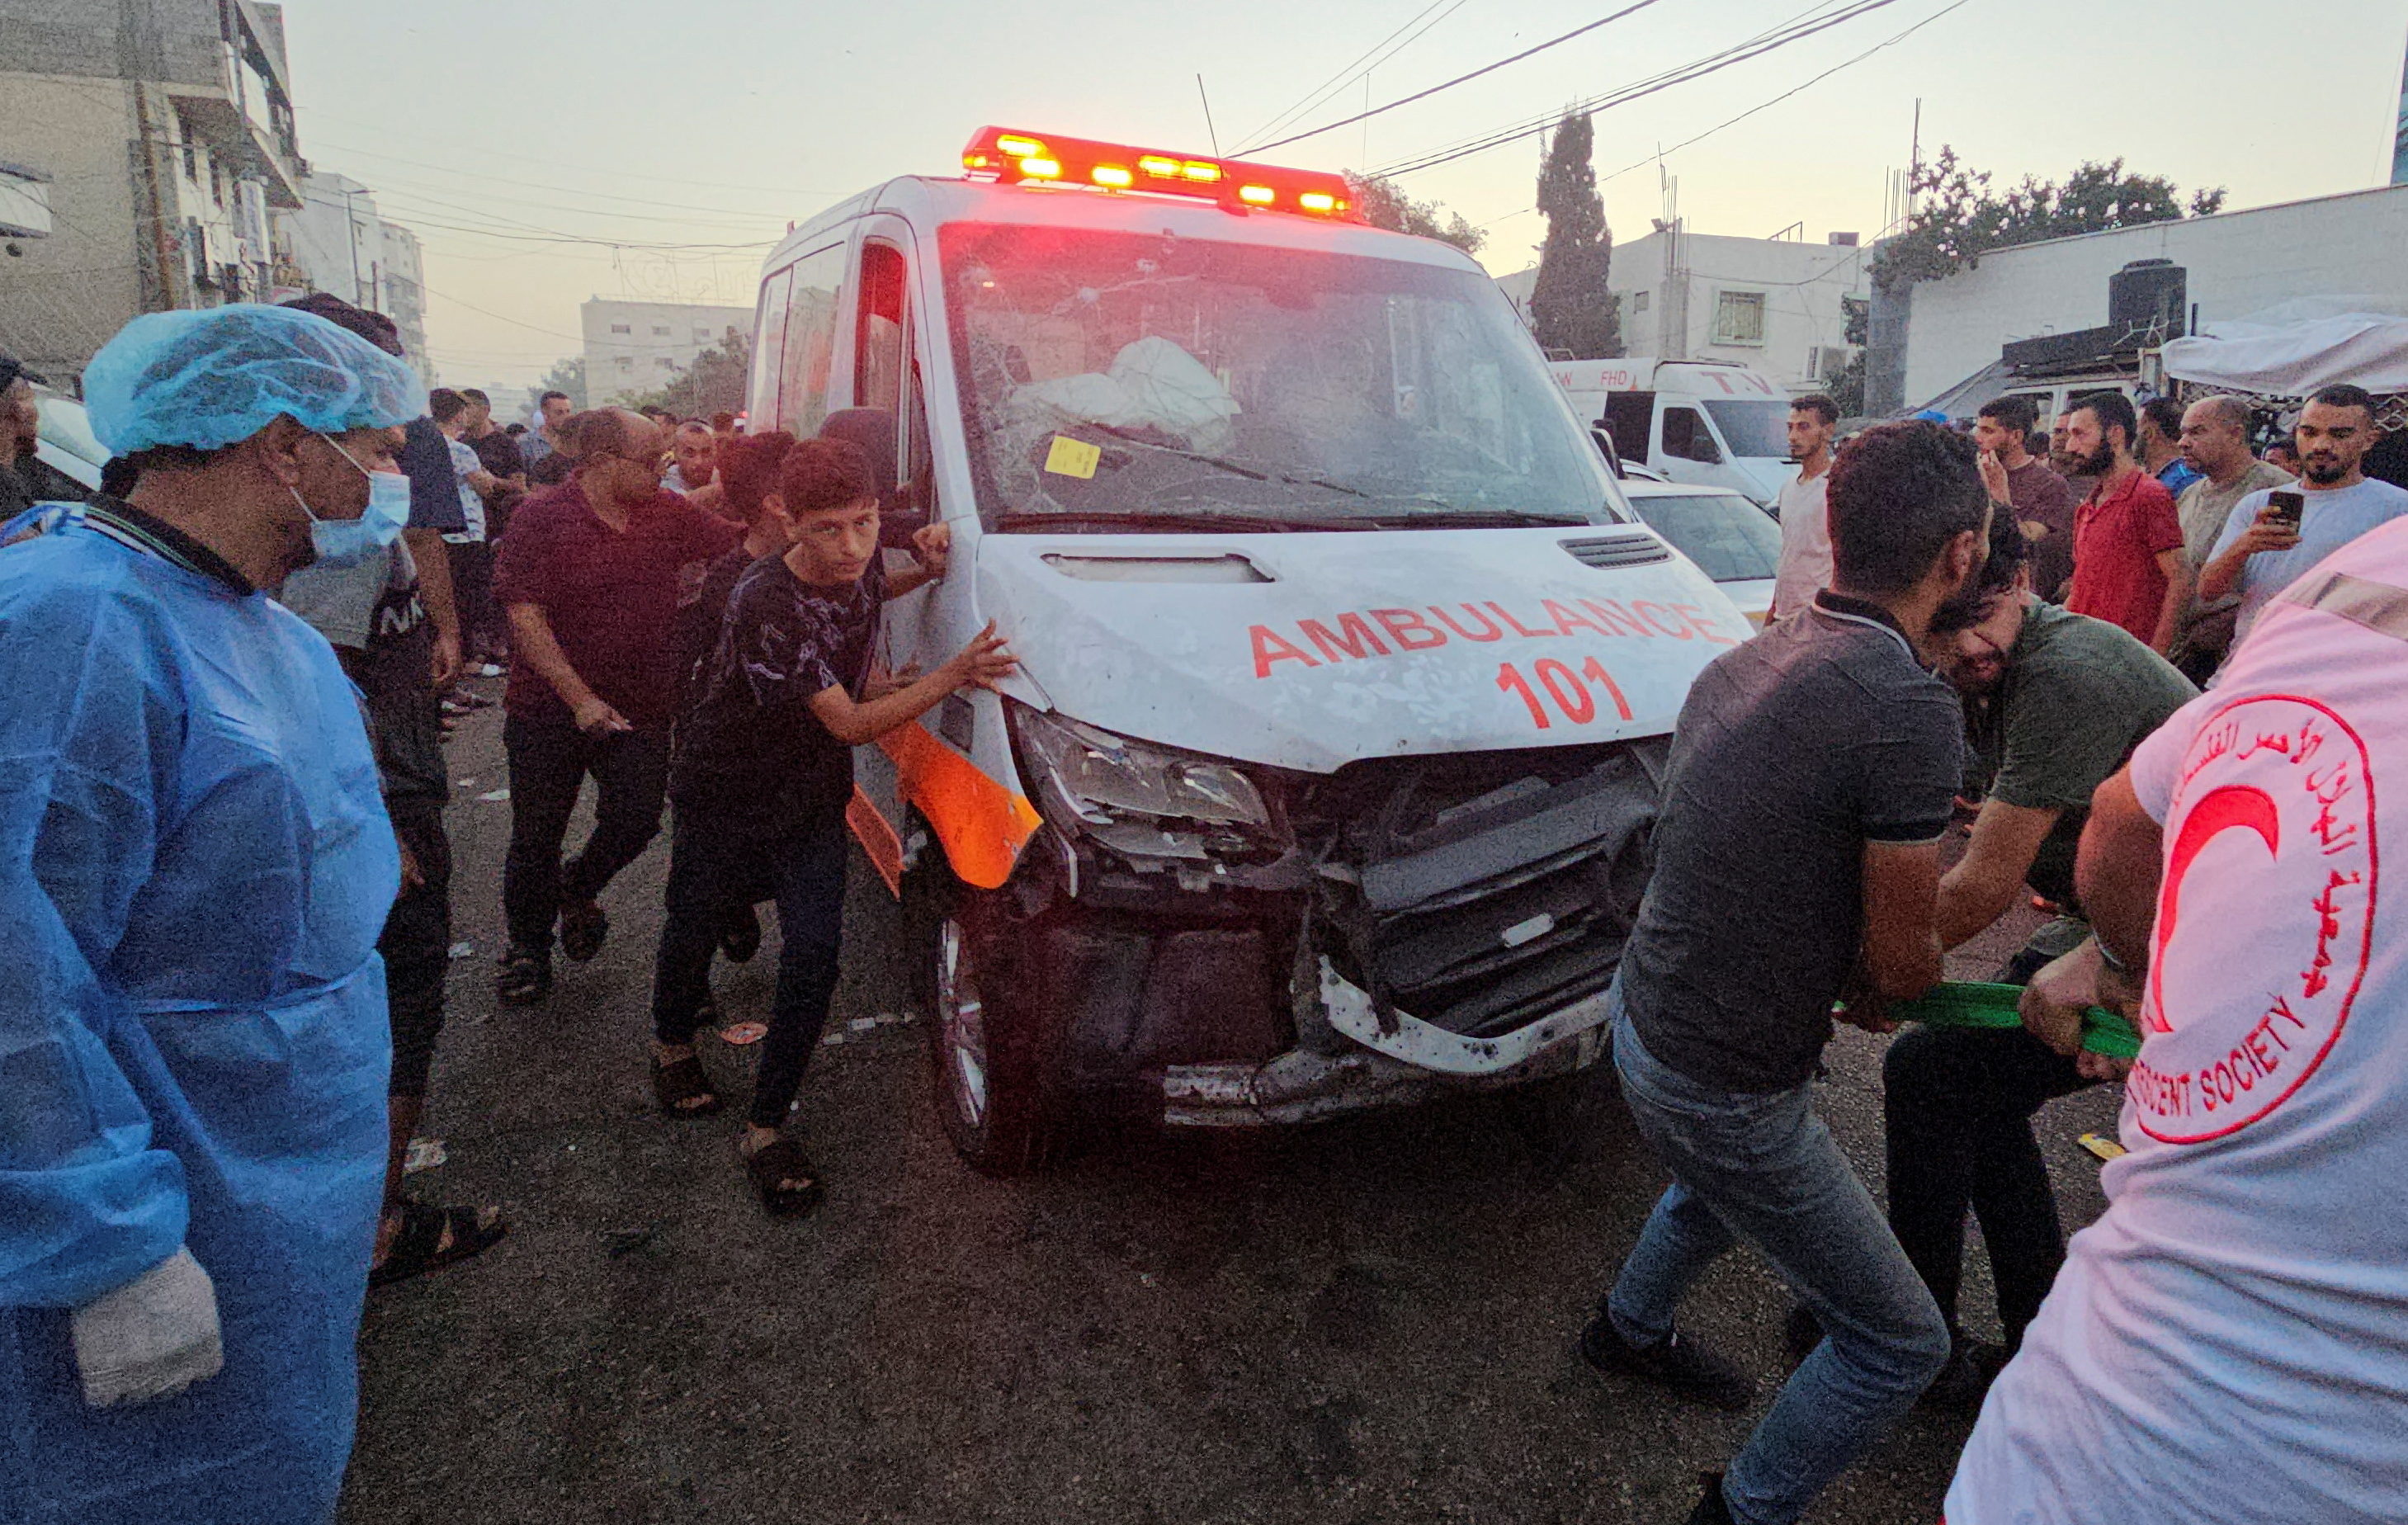 Israel strikes ambulance near Gaza hospital, 15 reported killed | Reuters